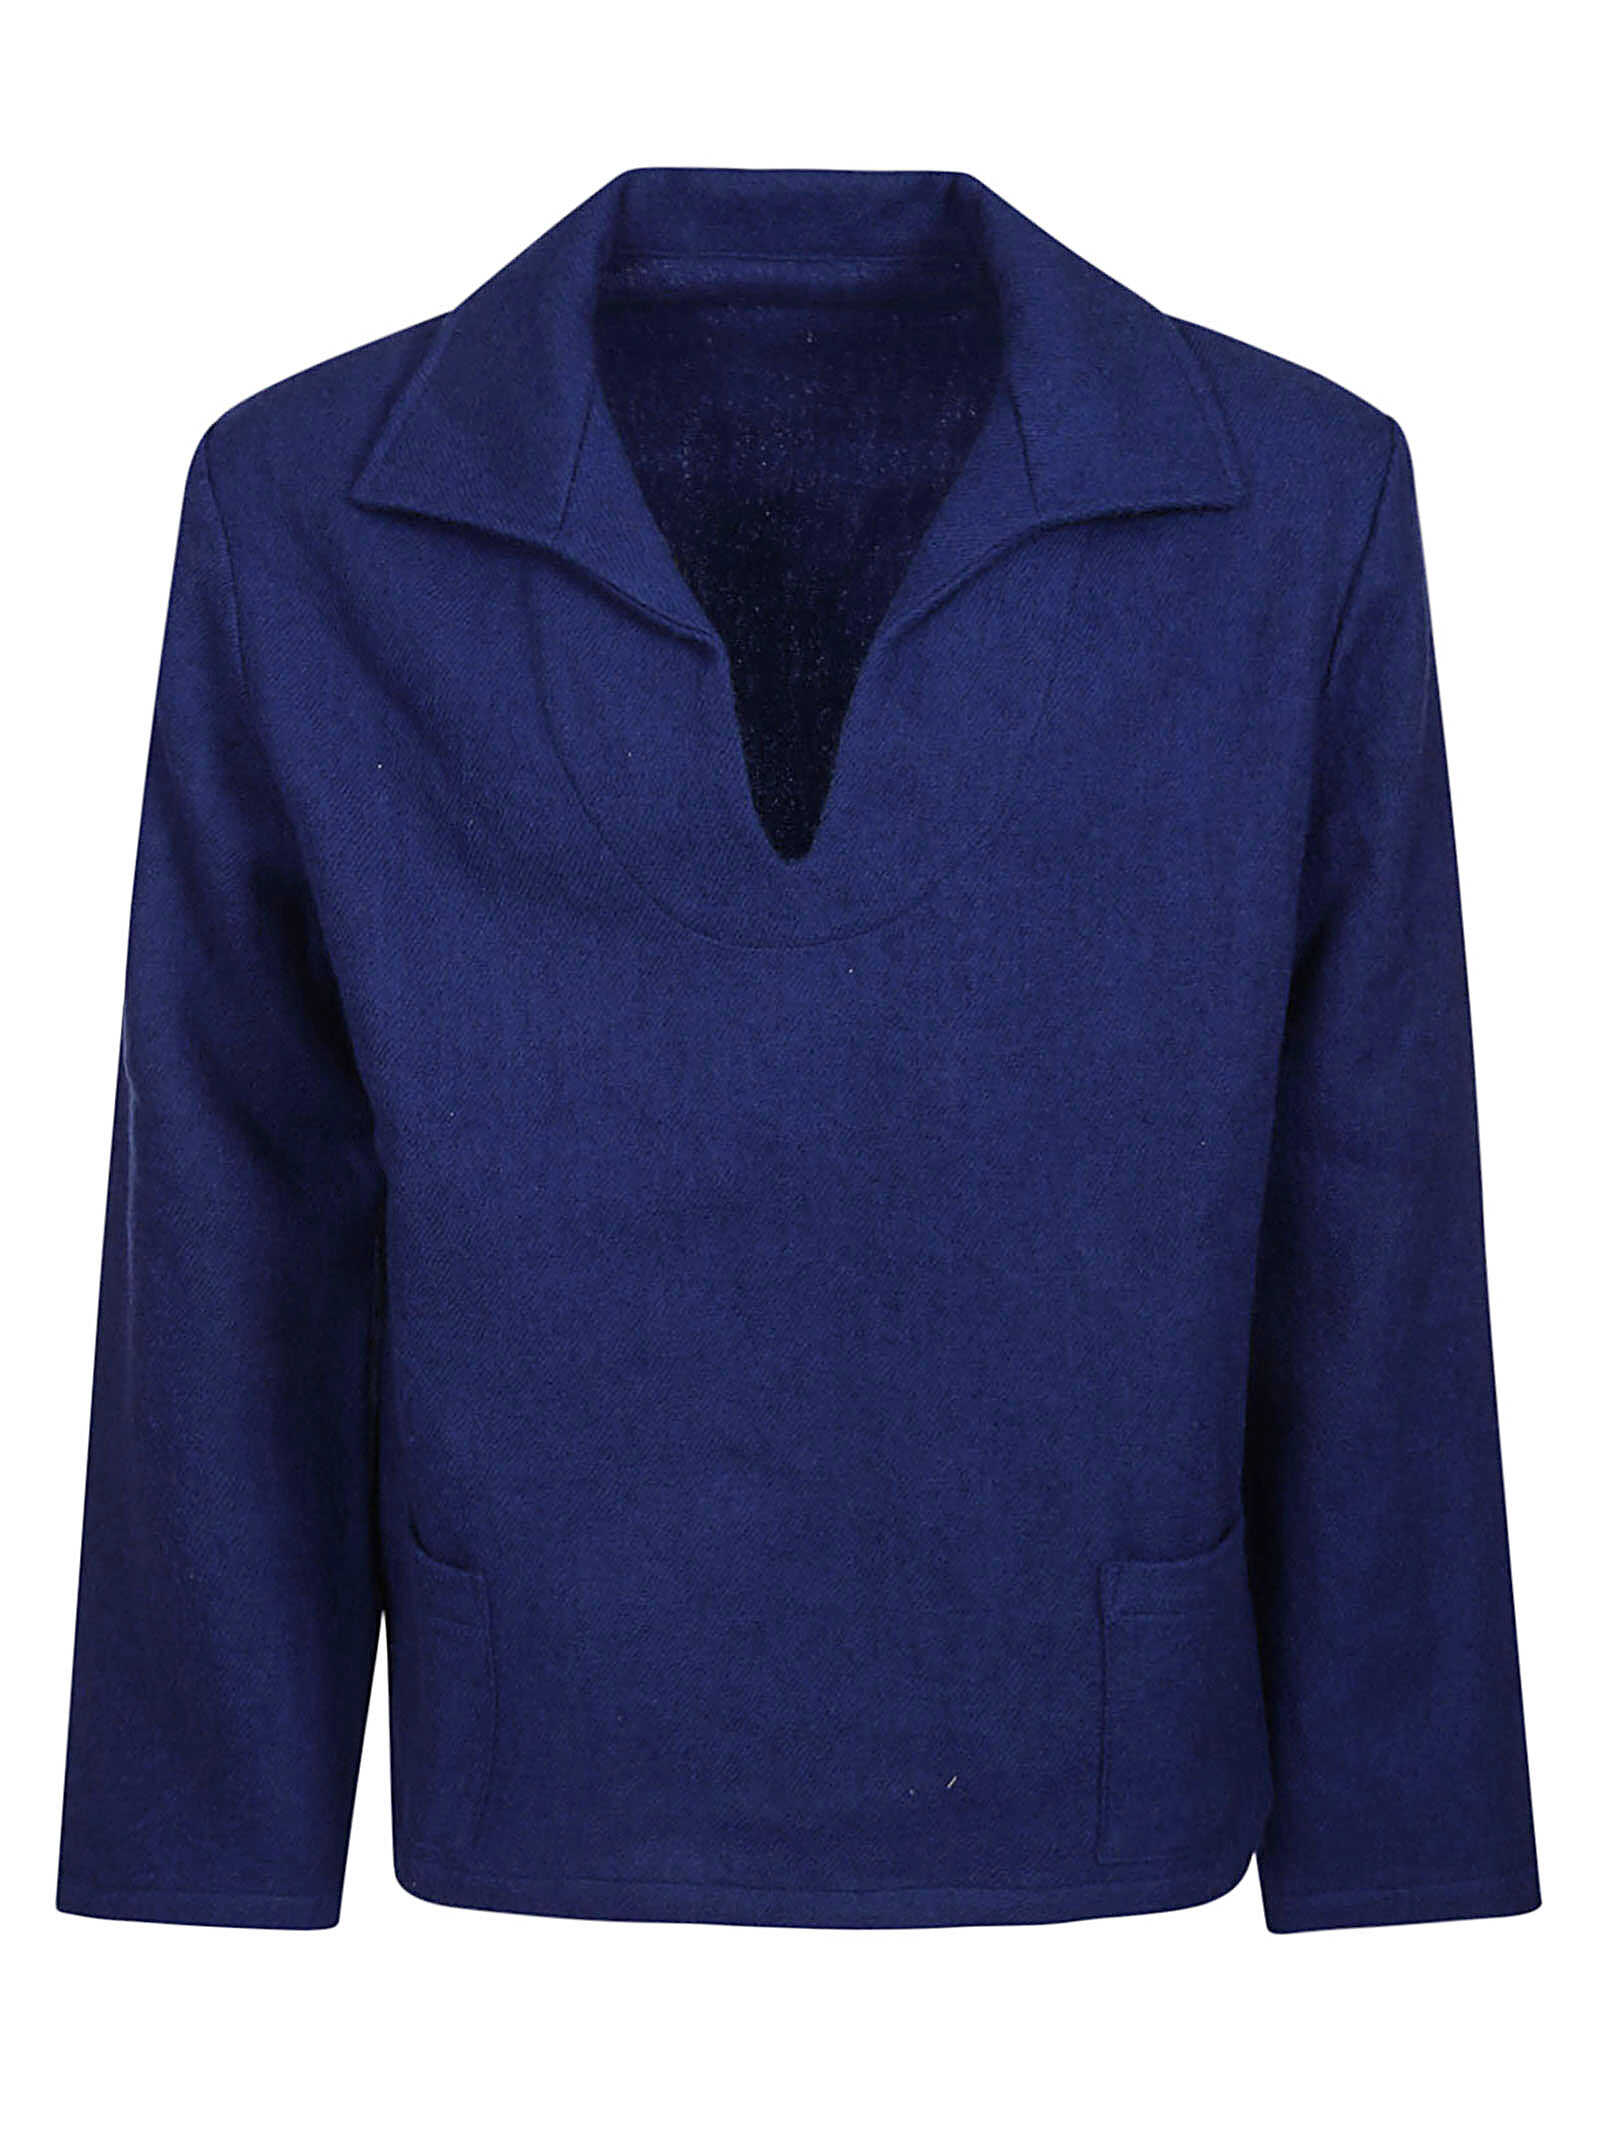 FORTELA FORTELA wool sweater FRANCO2.MA828 BLU Blu